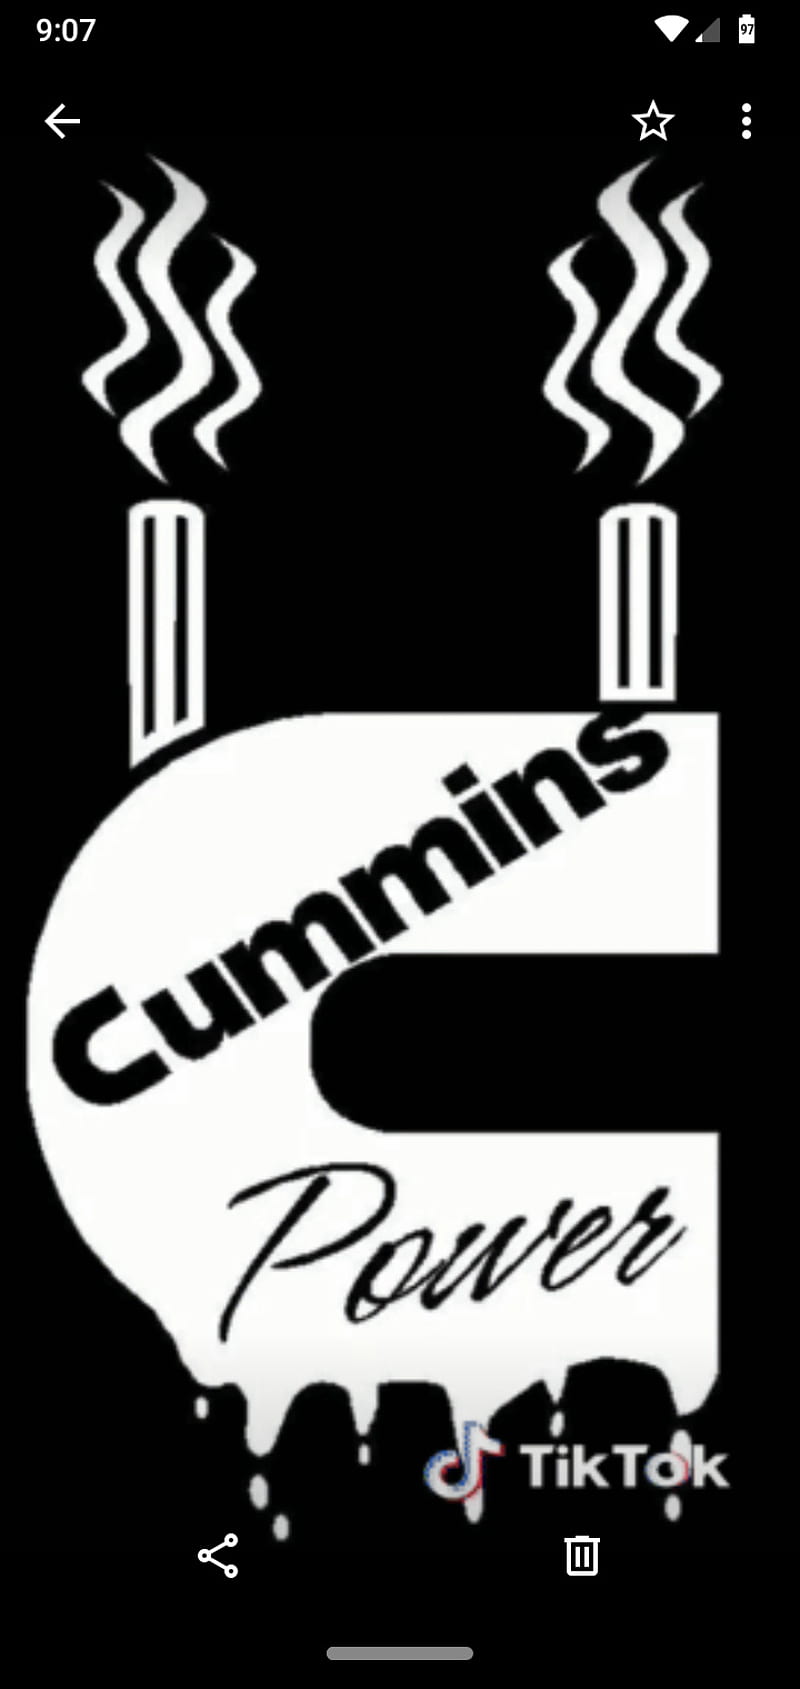 Cummins Logo Wallpaper